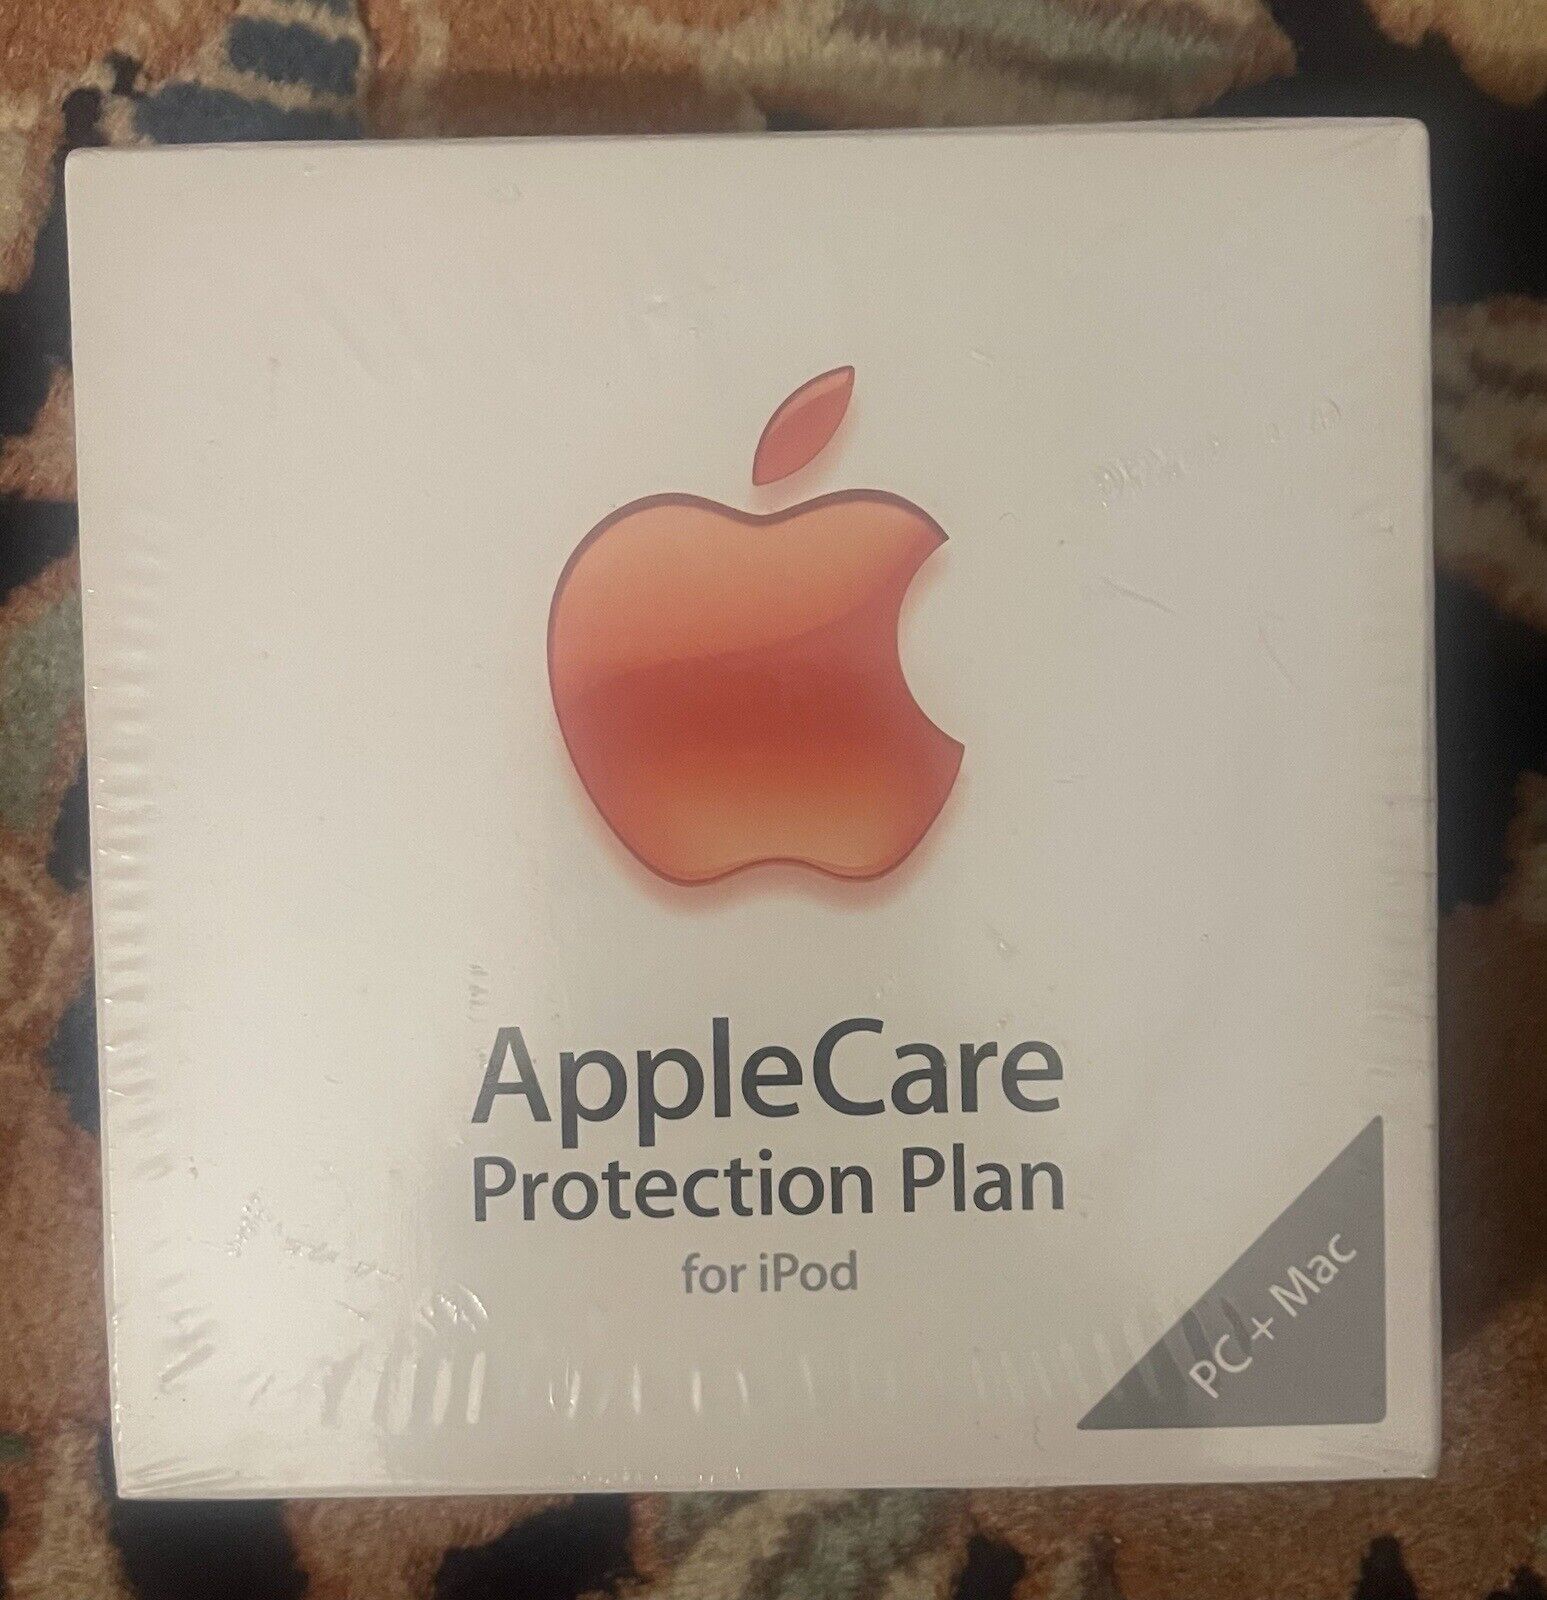 AppleCare Protection Plan for IPod